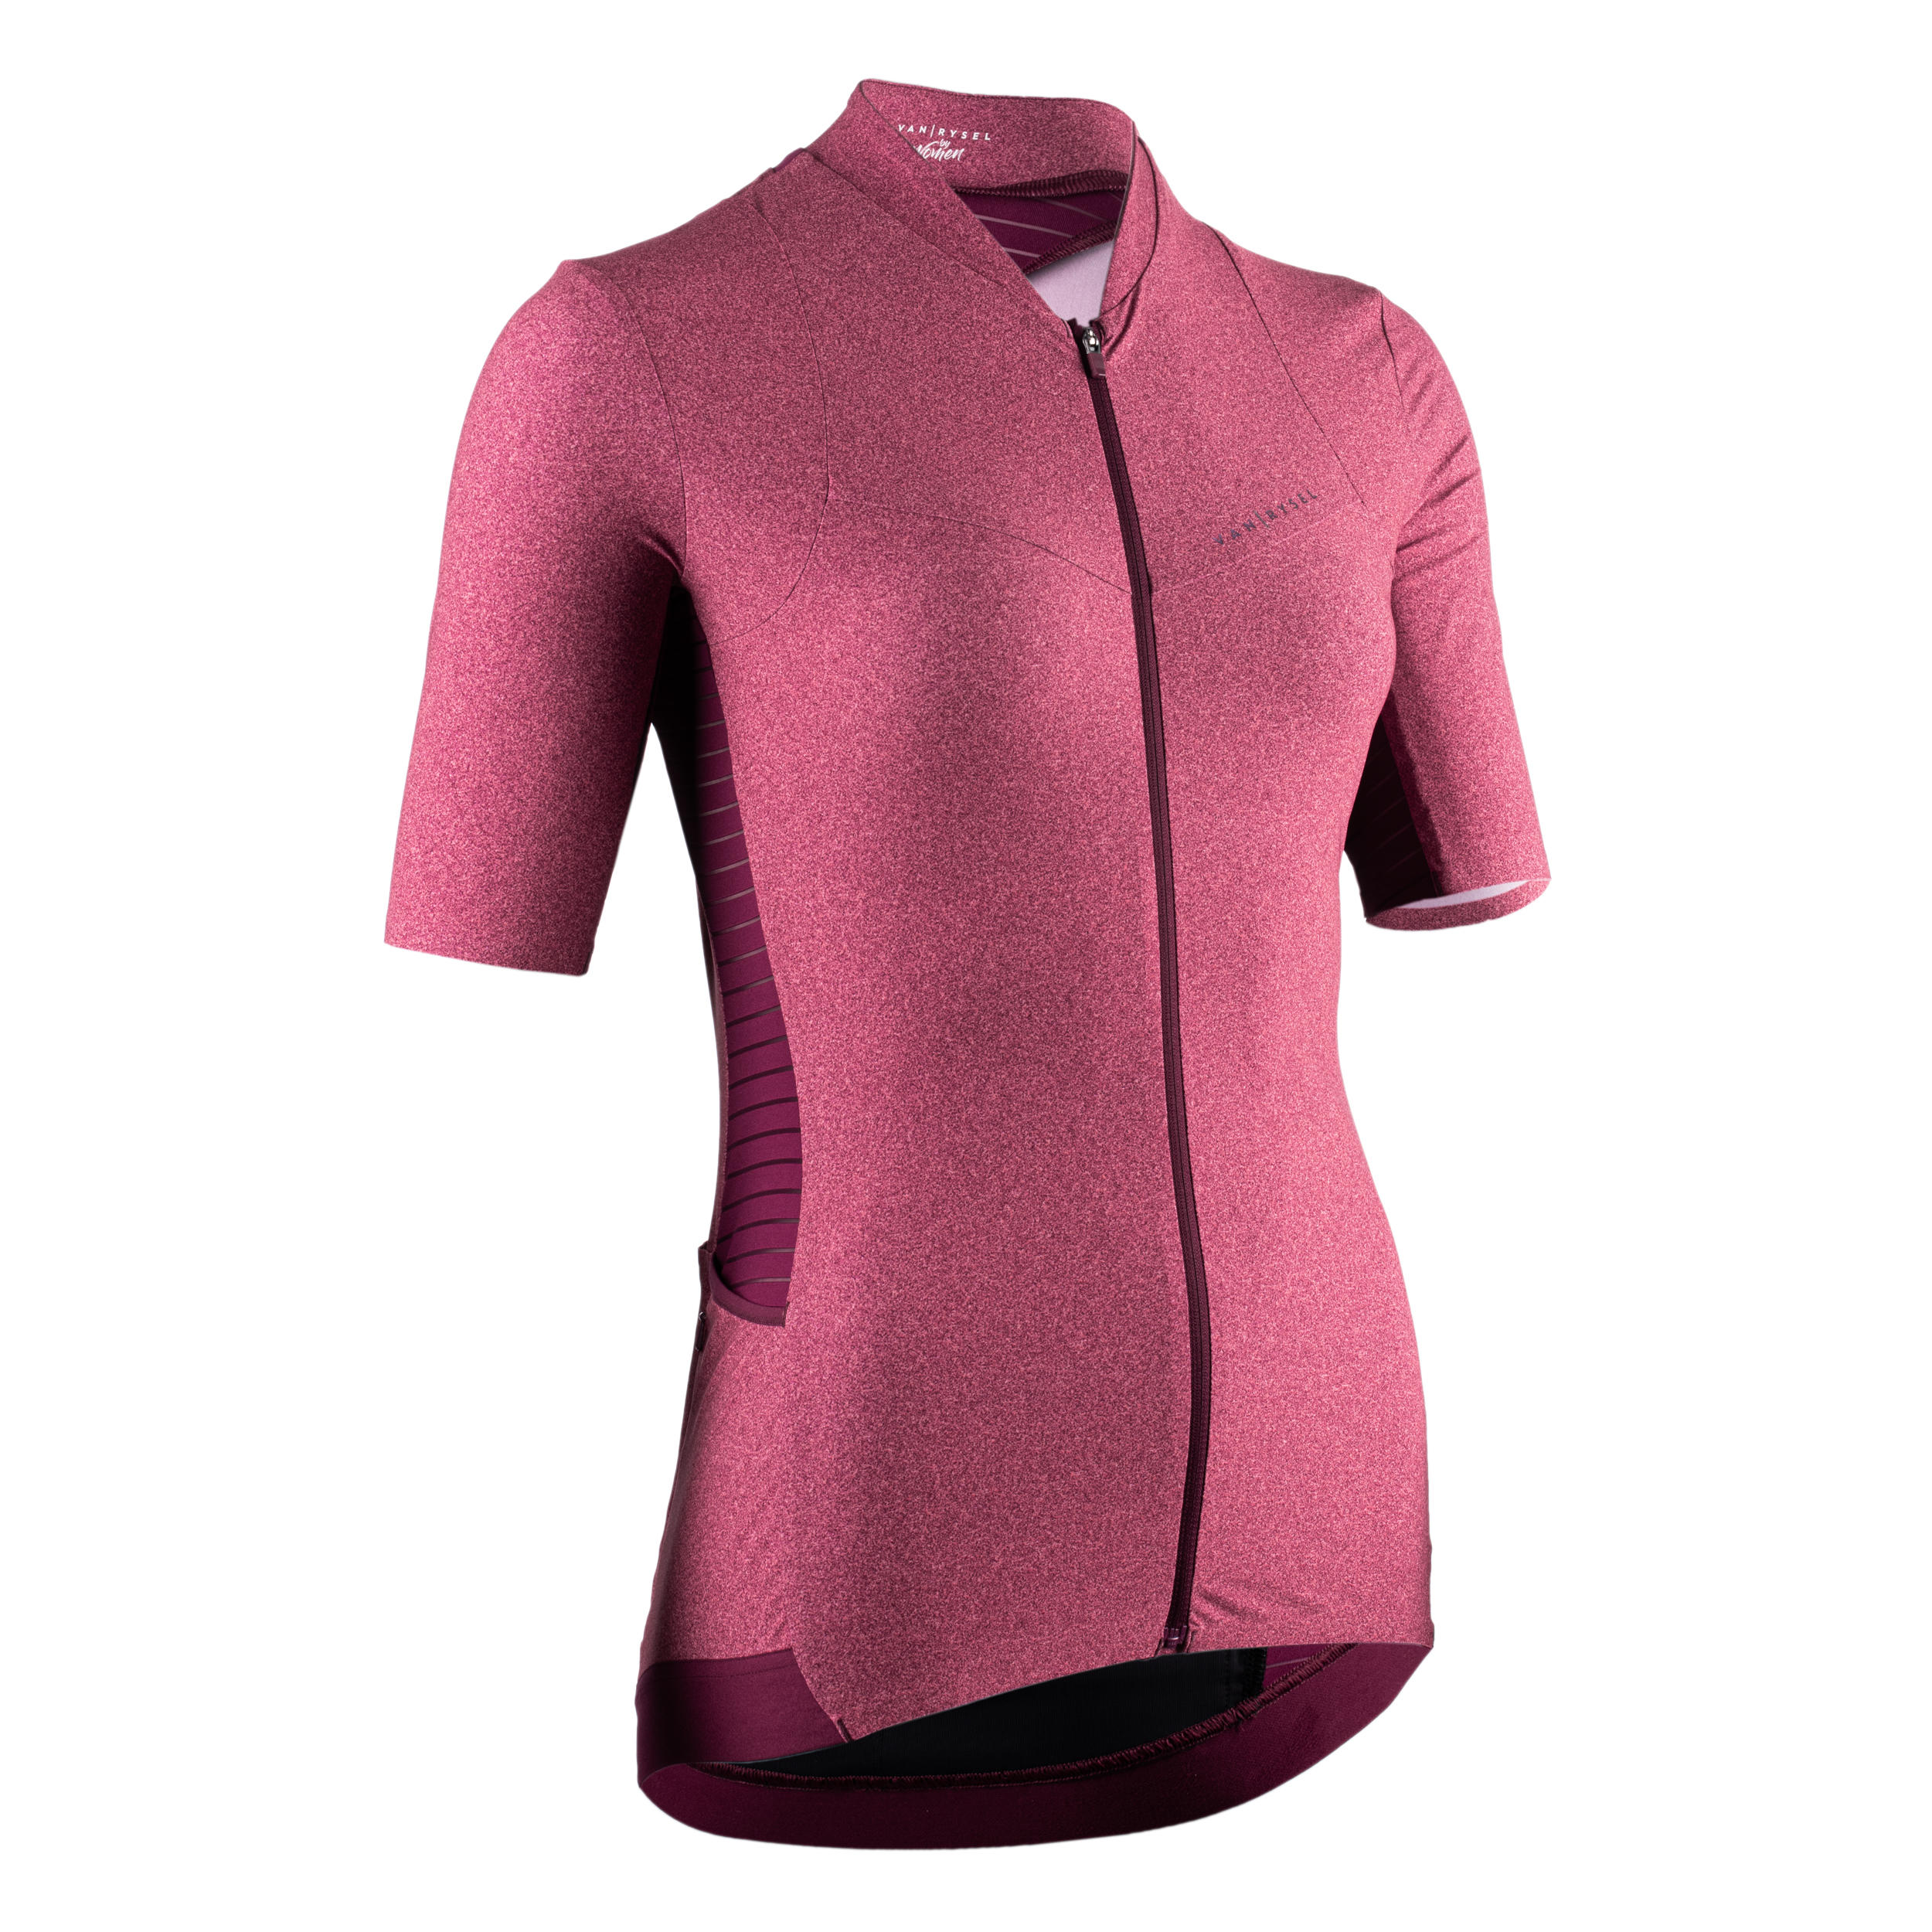 VAN RYSEL Women's Short-Sleeved Cycling Jersey RCR - Pink